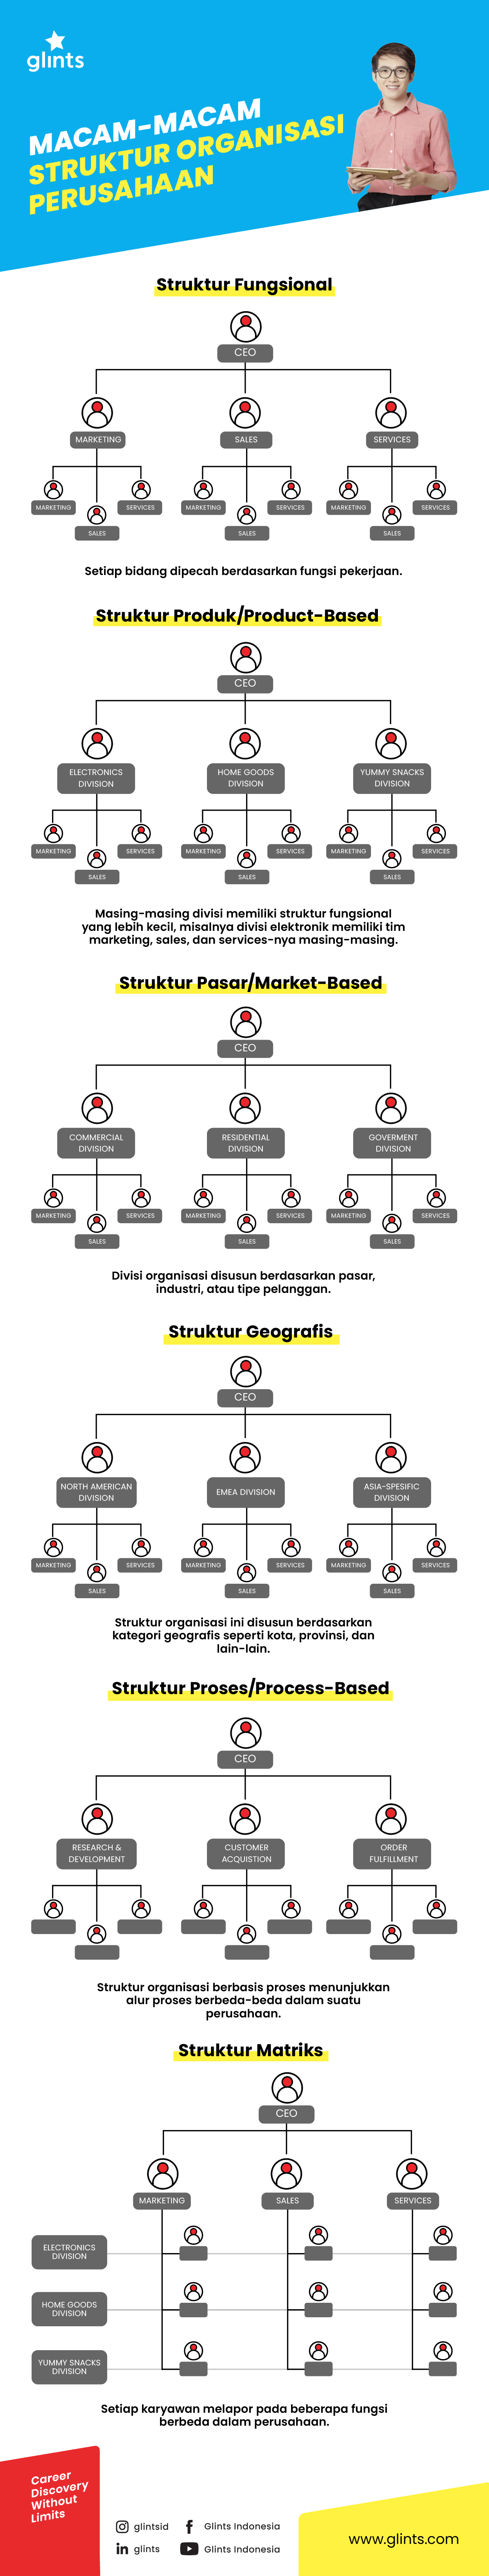 infographic struktur organisasi